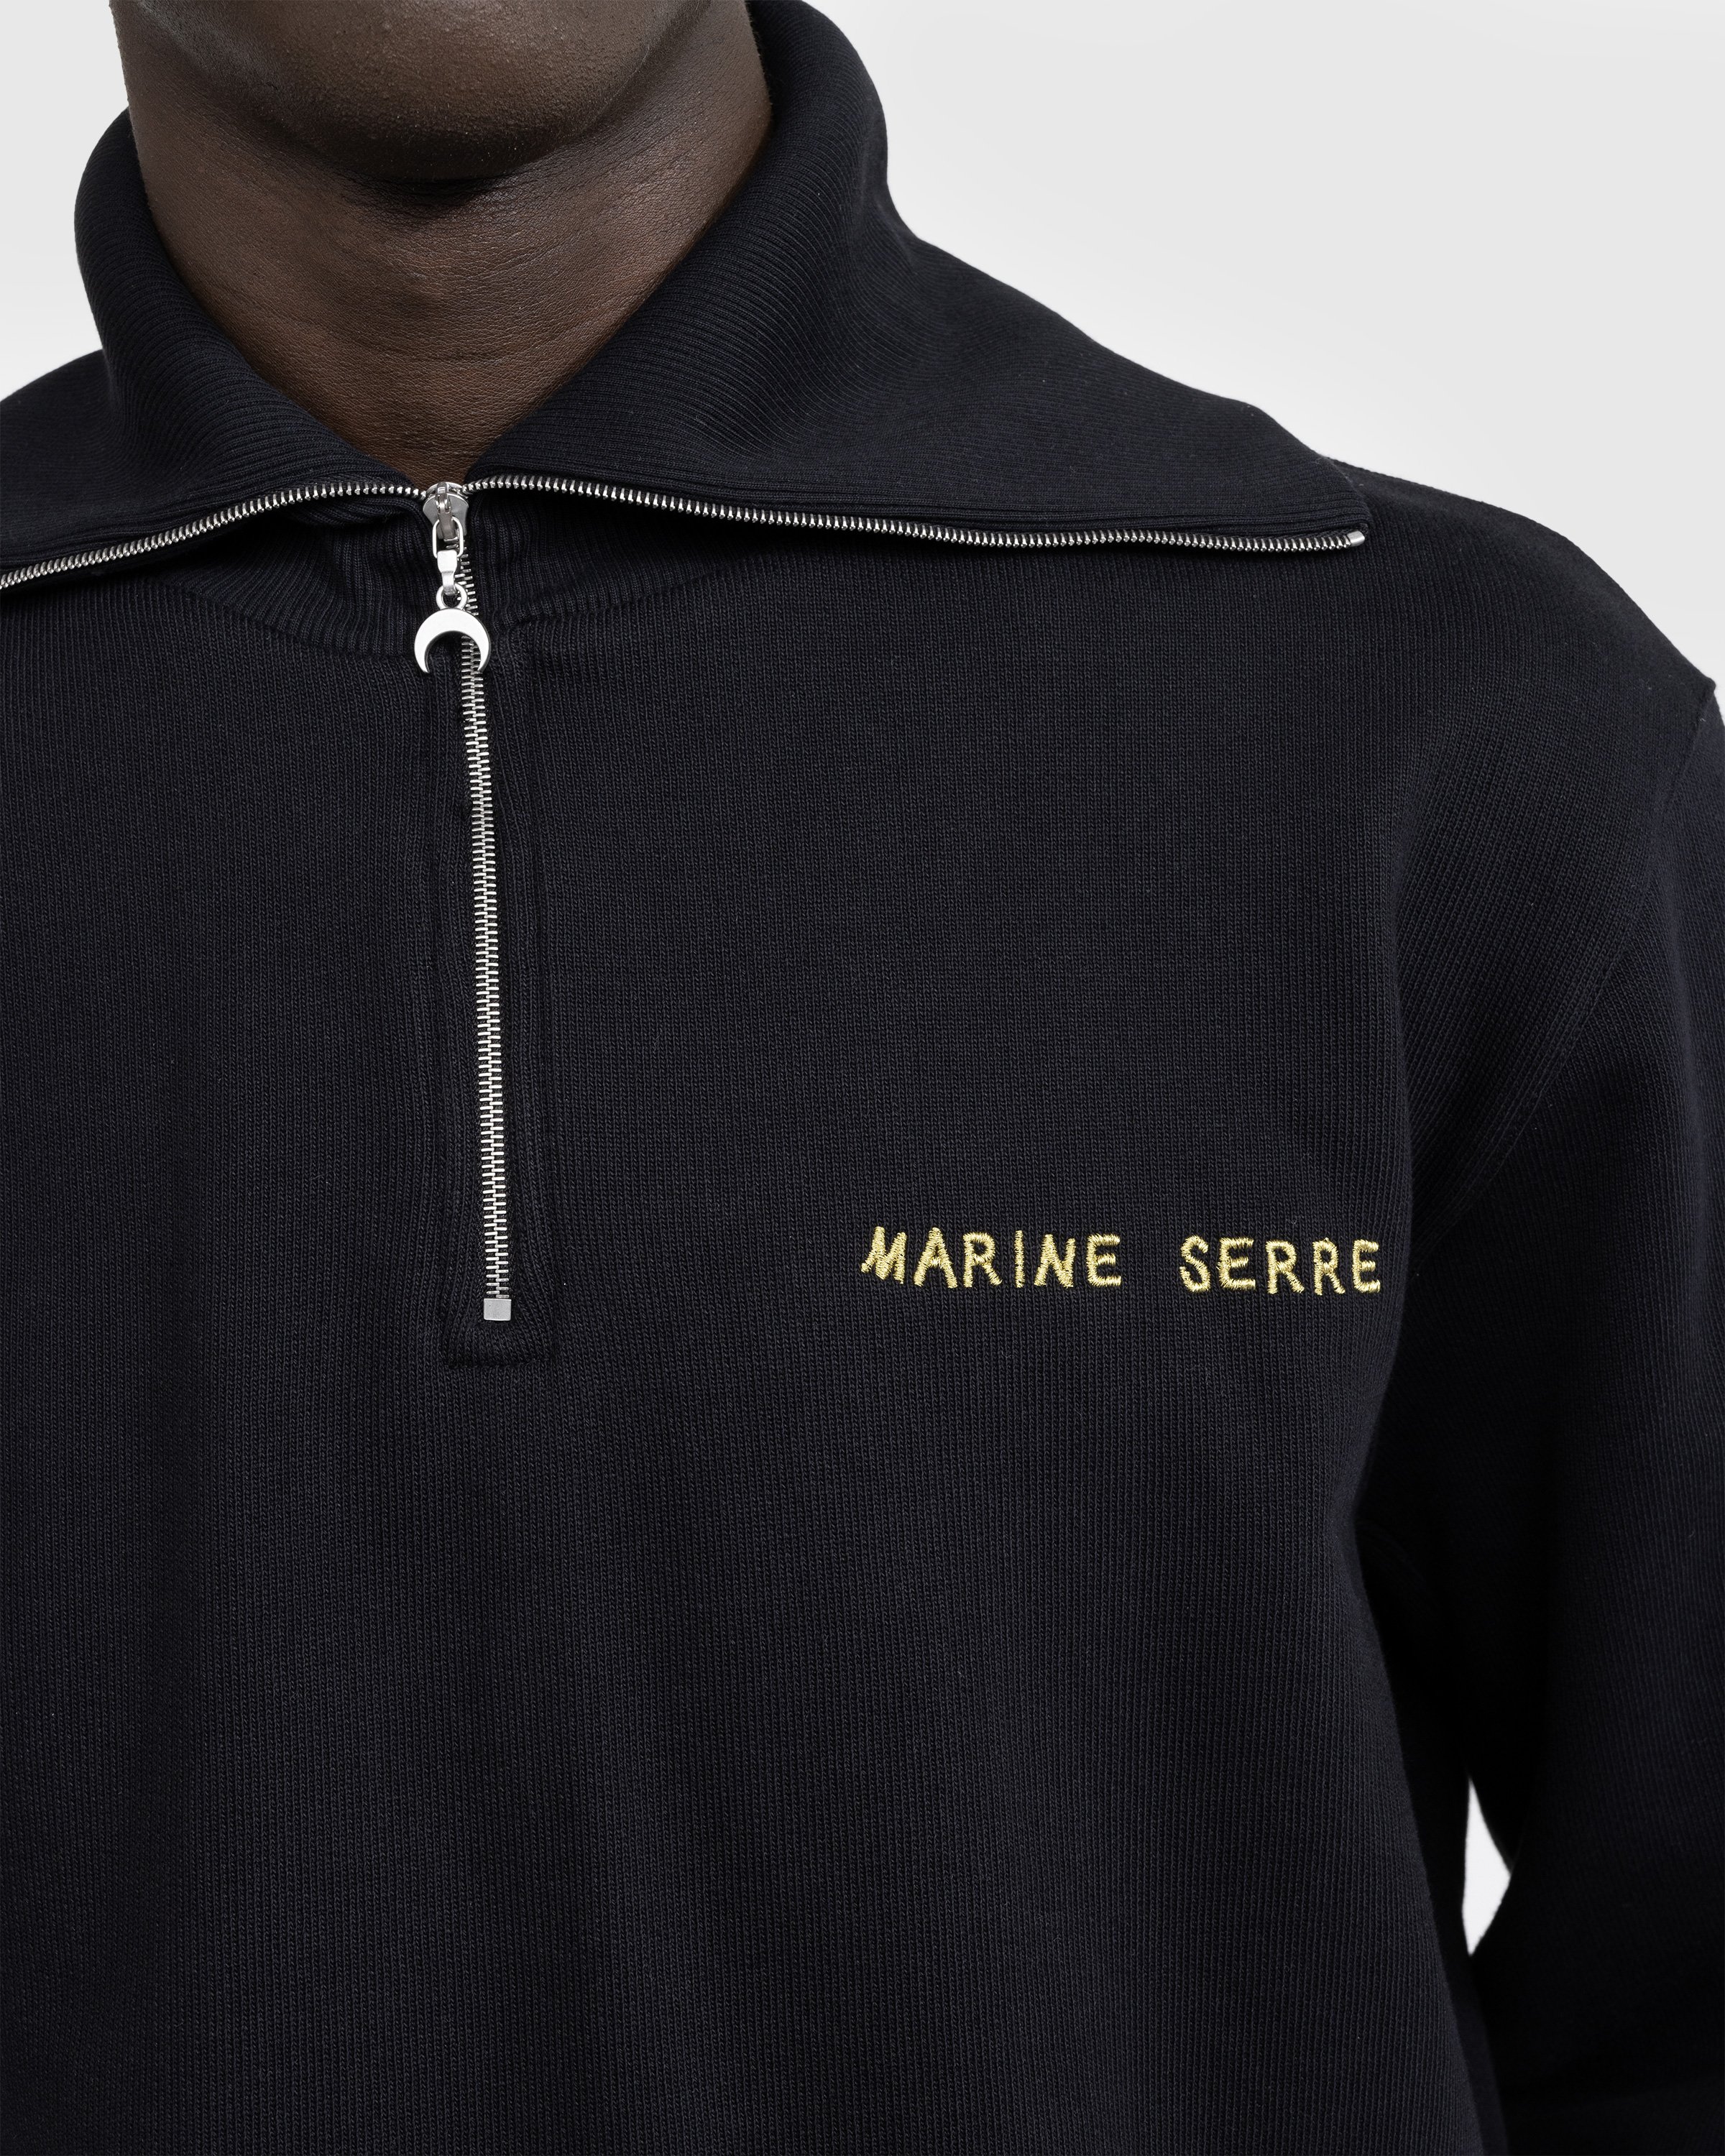 Marine Serre - Ornament Half-Zip Sweater Black - Clothing - Black - Image 4